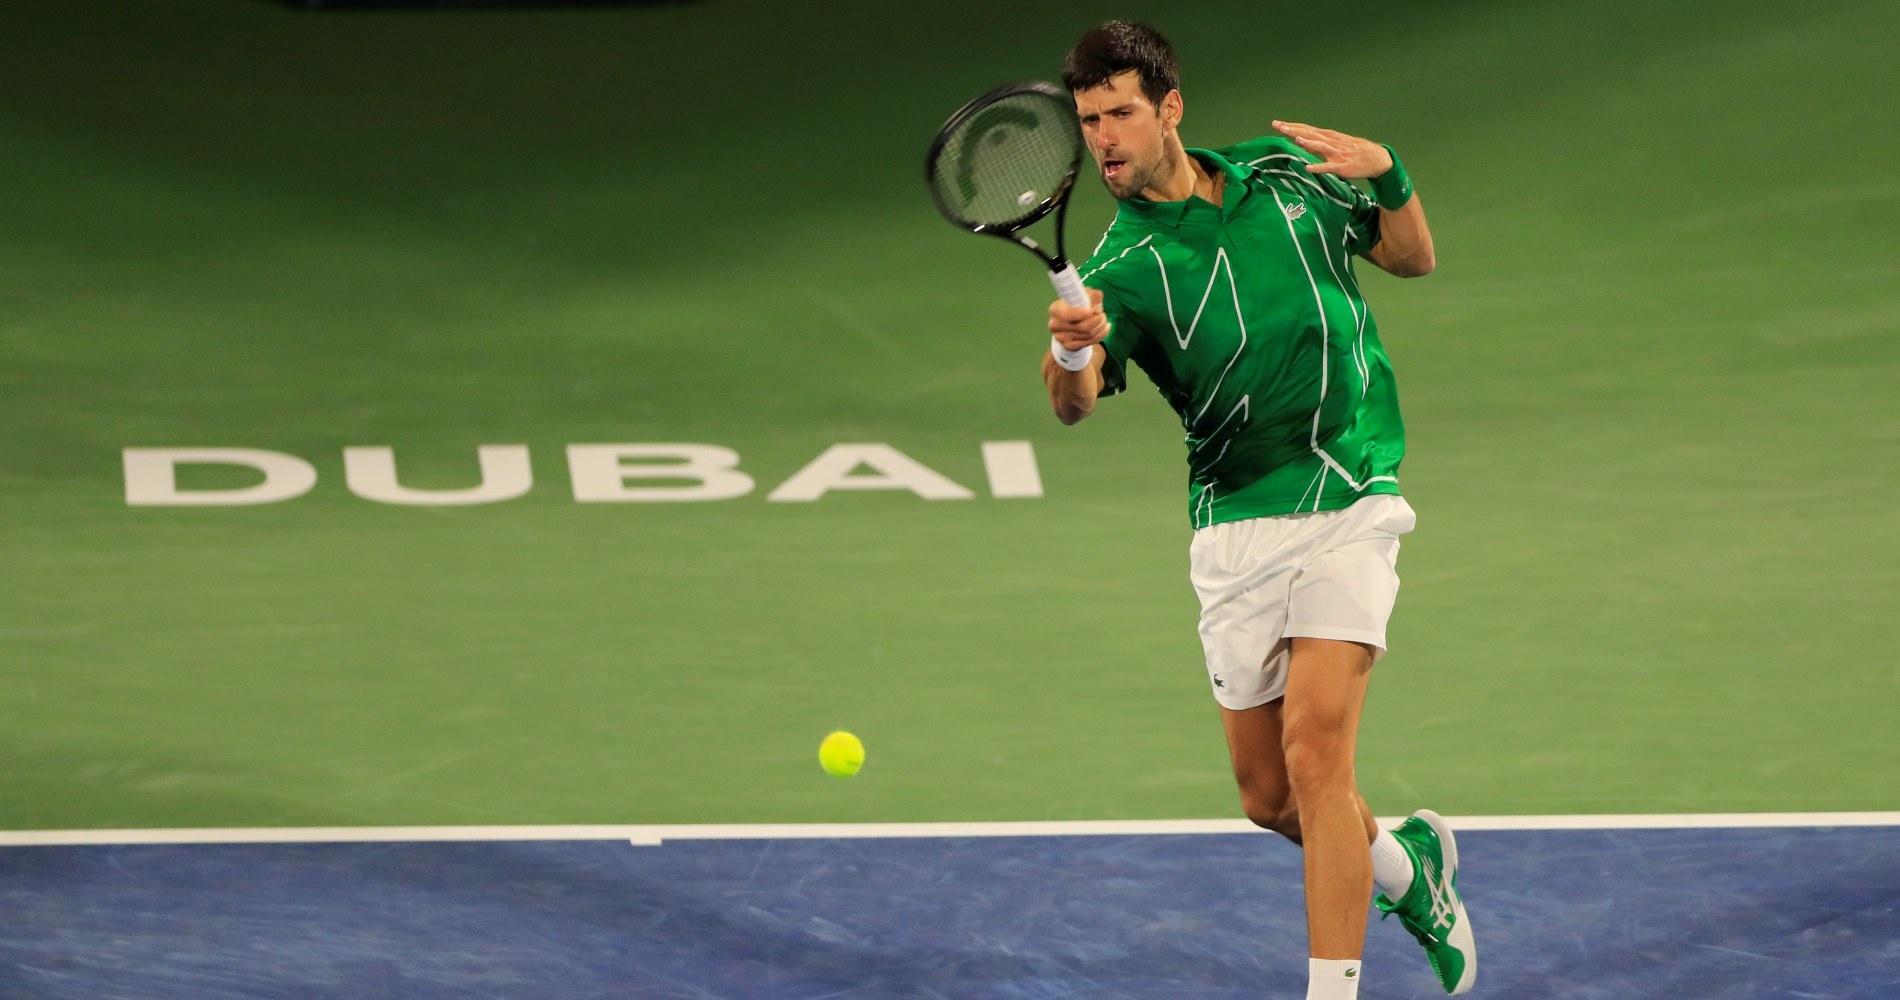 Djokovic is hitting a forehand Dubai 2020 Khachanov